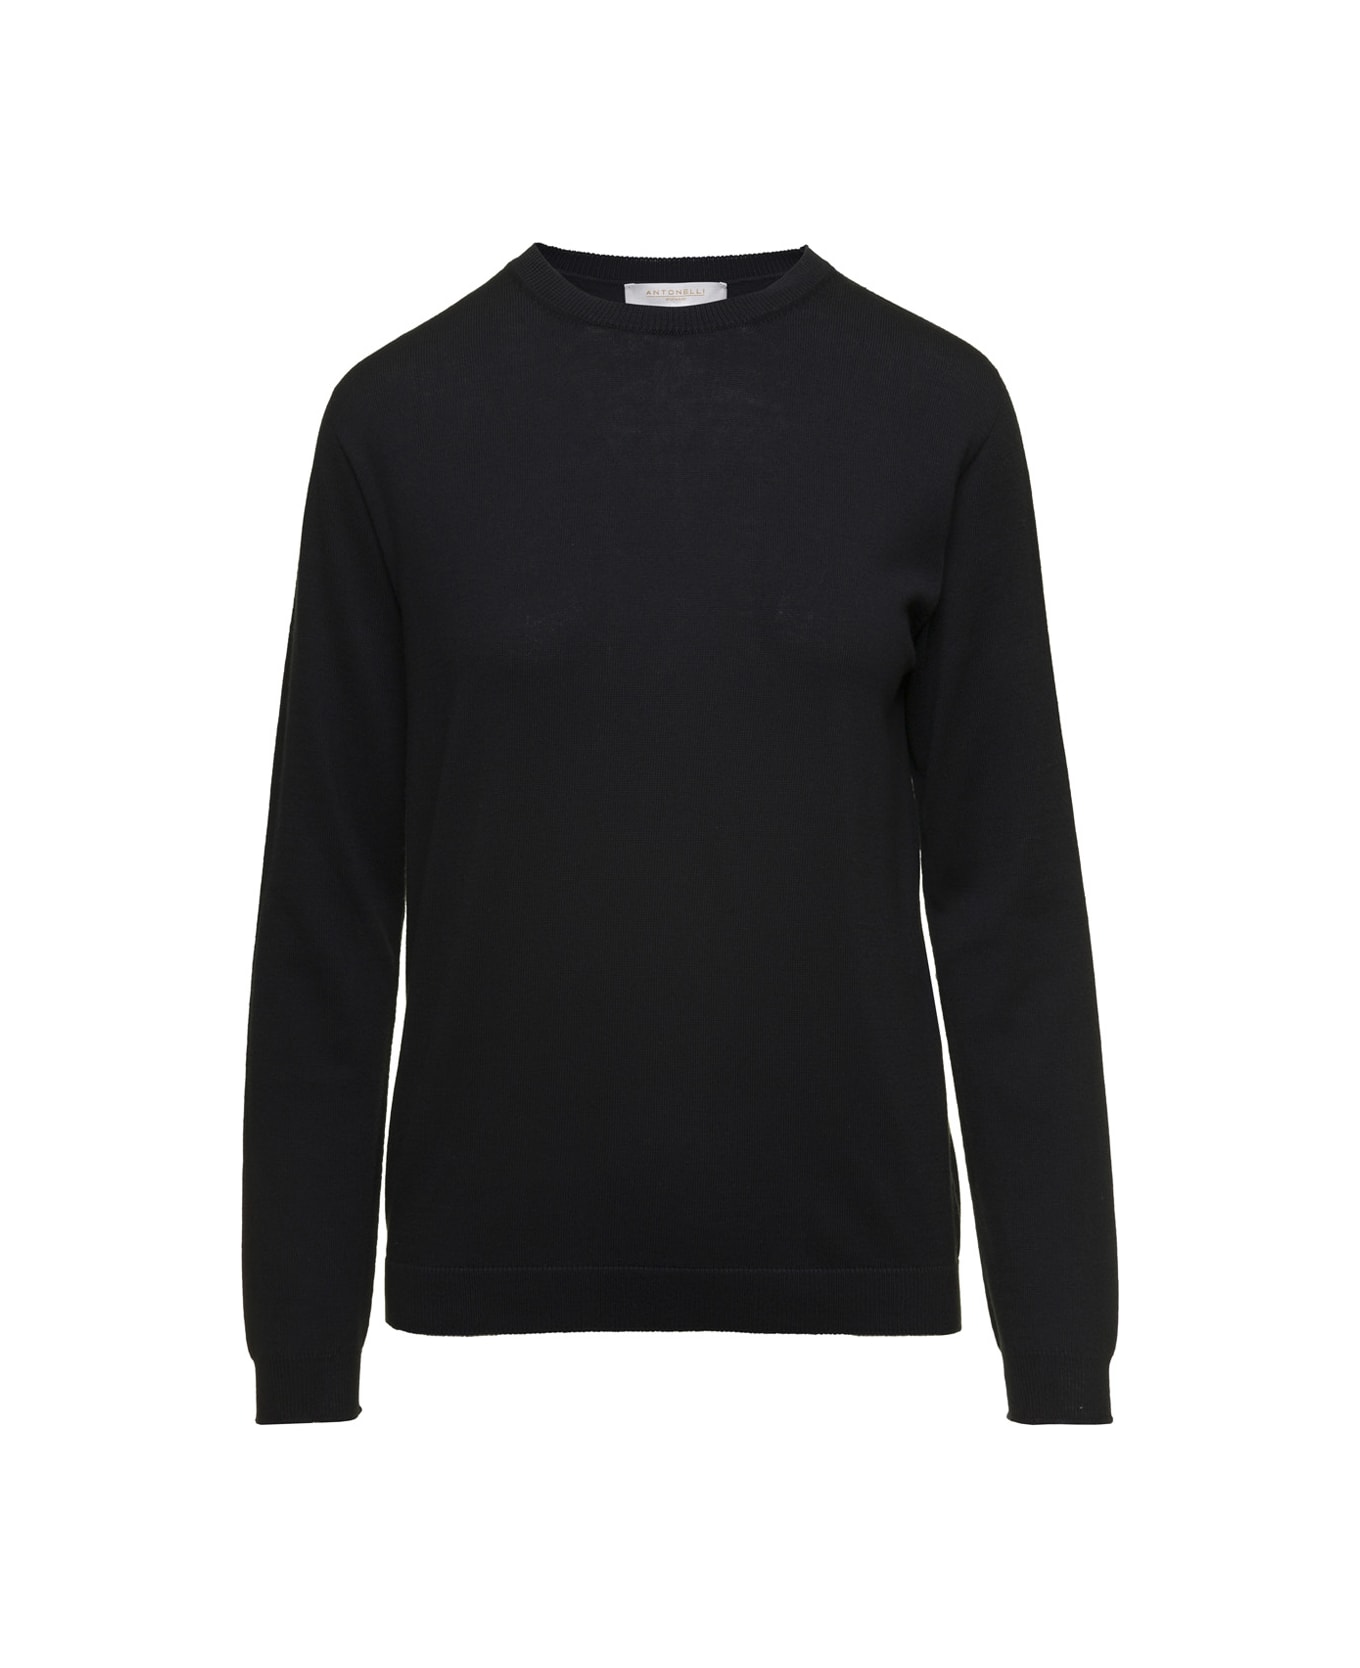 Antonelli Black Crew Neck Sweater In Cashmere Blend Woman - Black